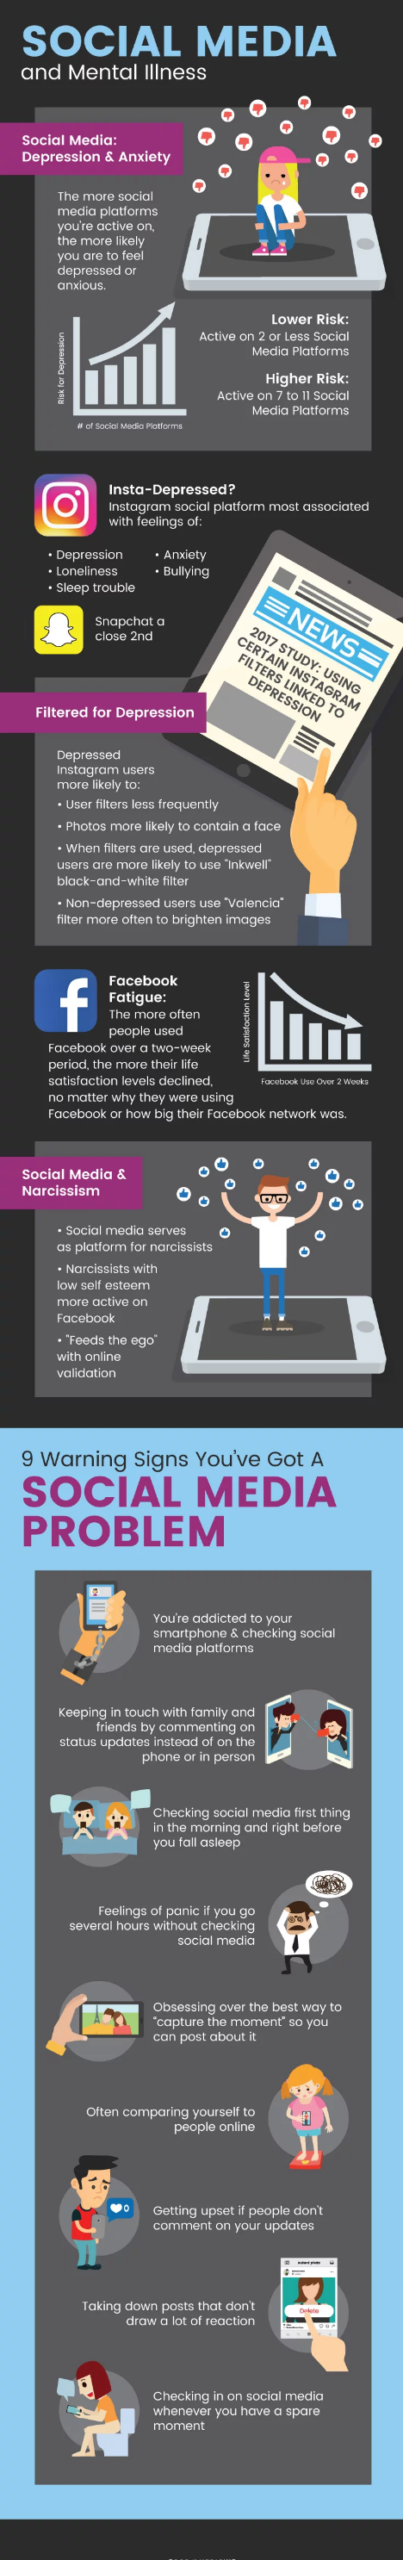 Social media mental illness - infographic